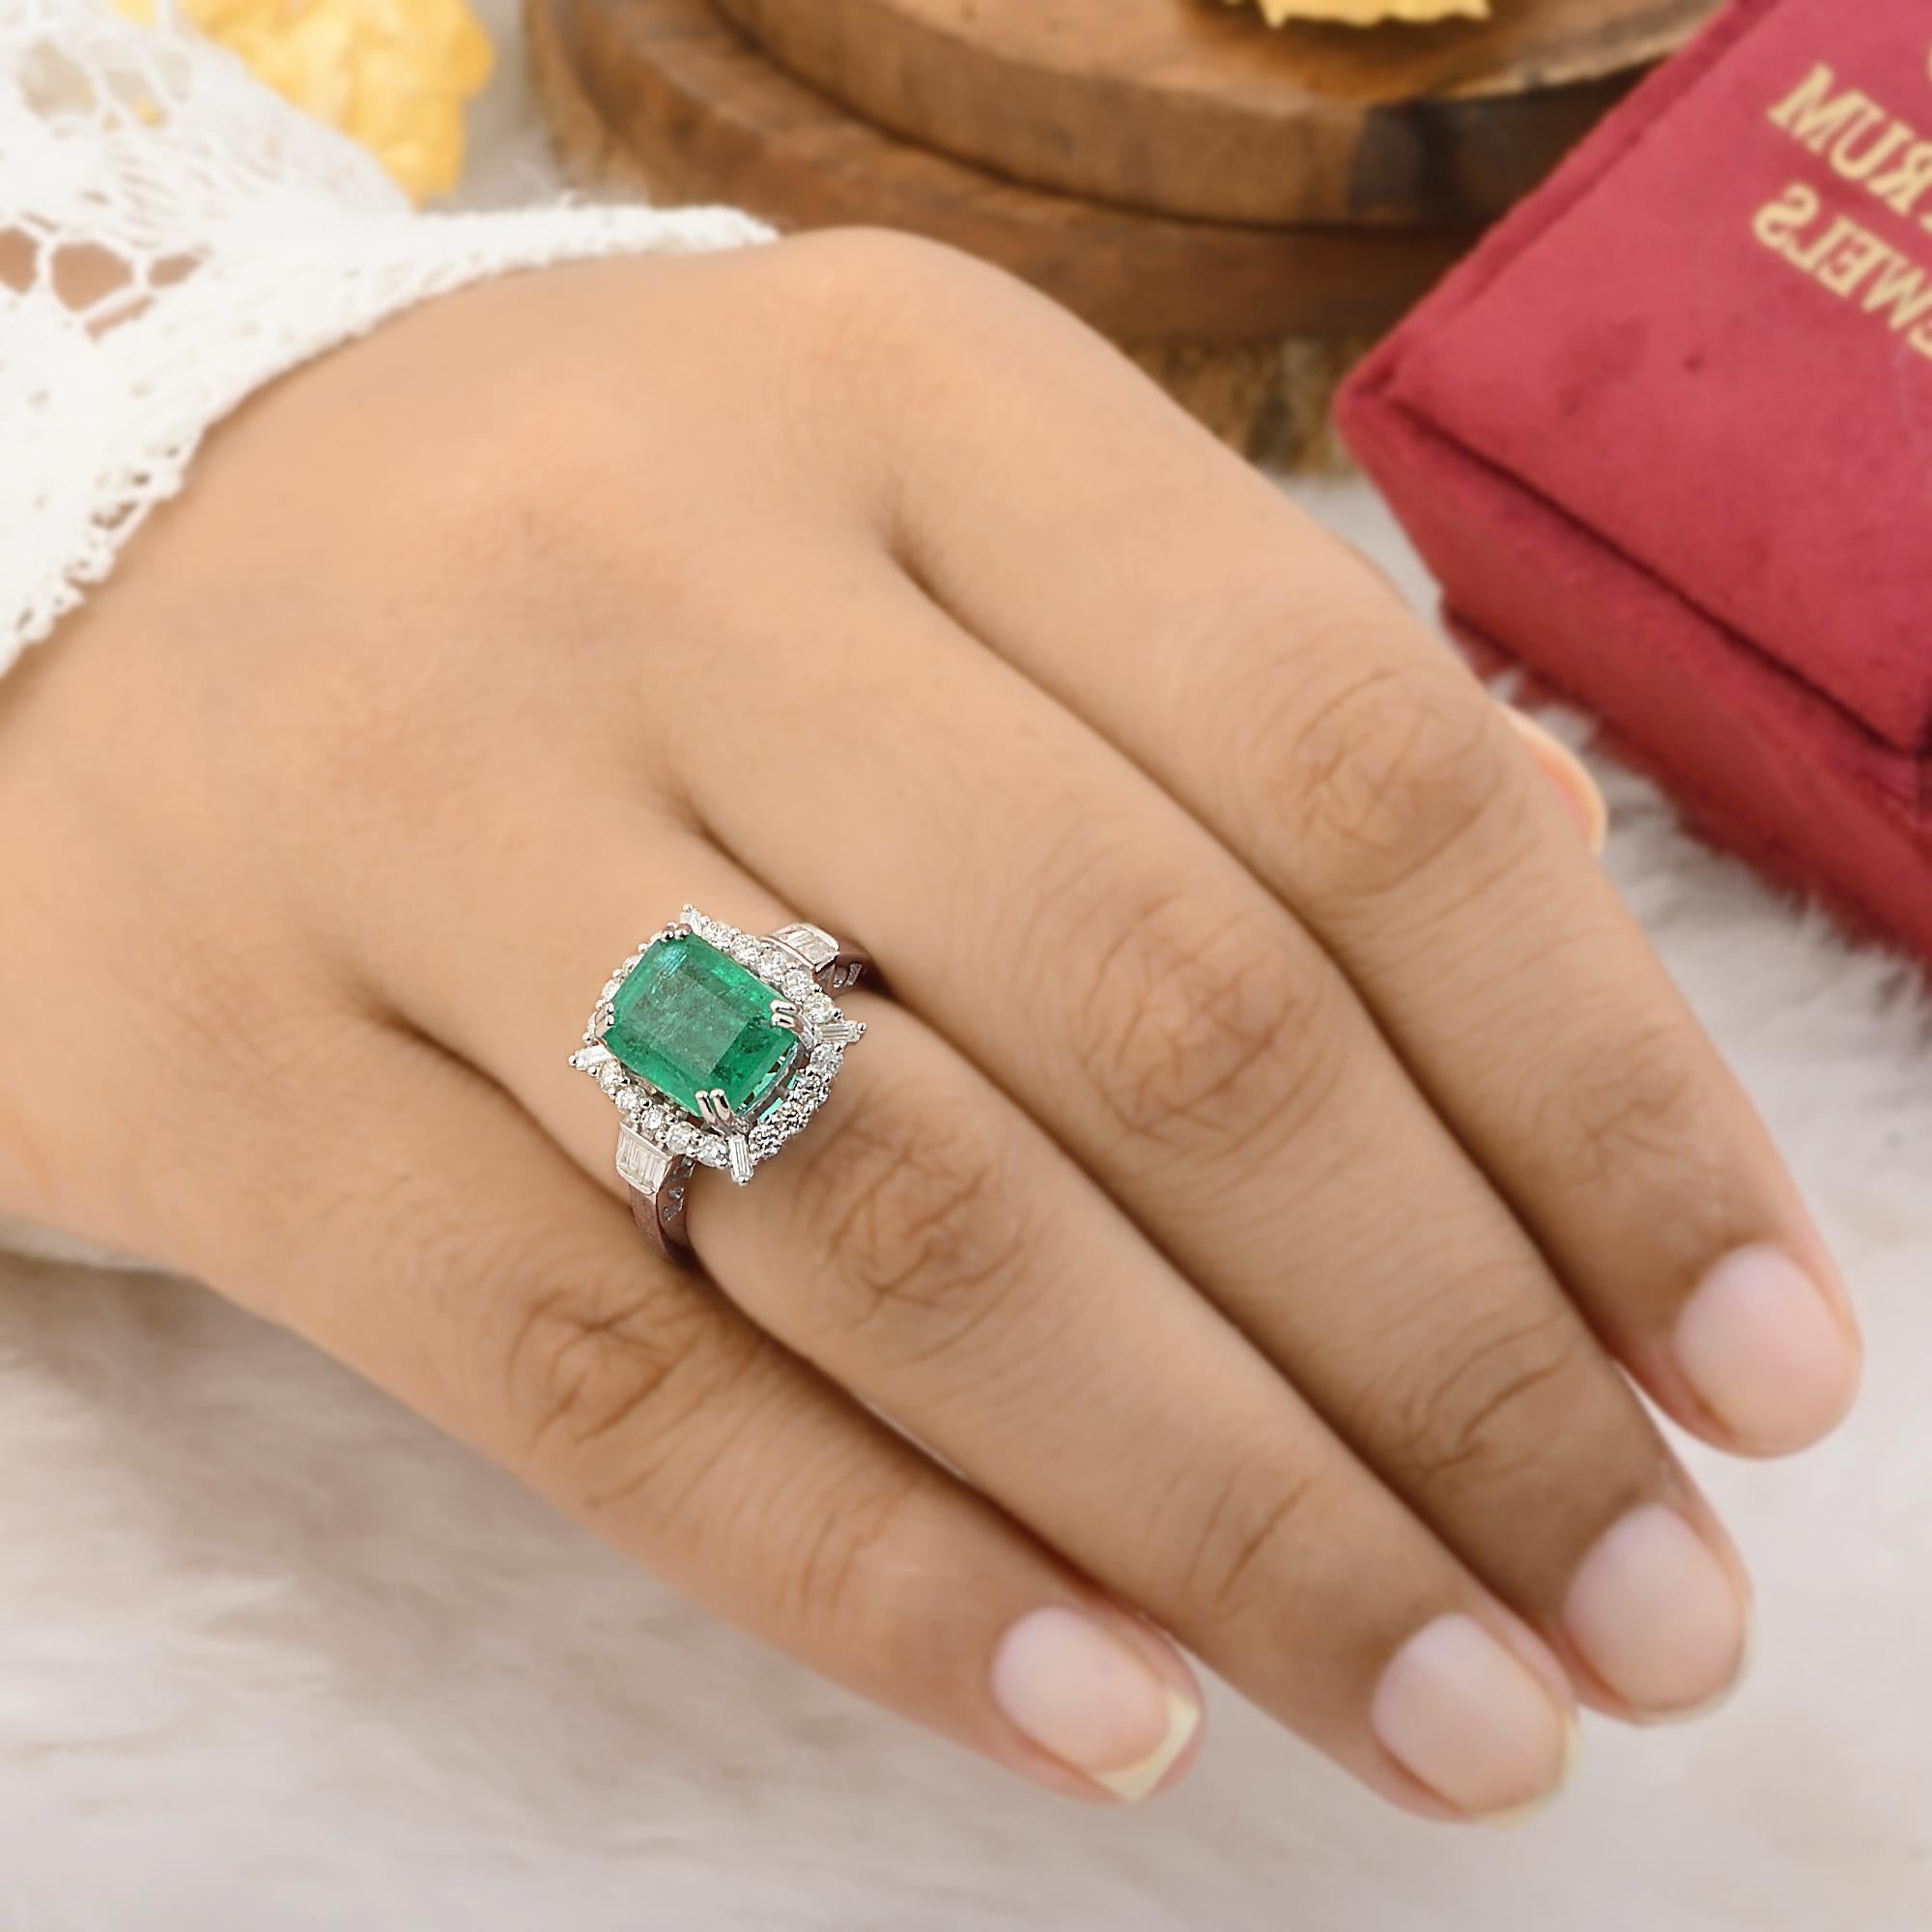 Women's Zambian Emerald Gemstone Cocktail Ring Baguette Diamond 10k White Gold Jewelry For Sale